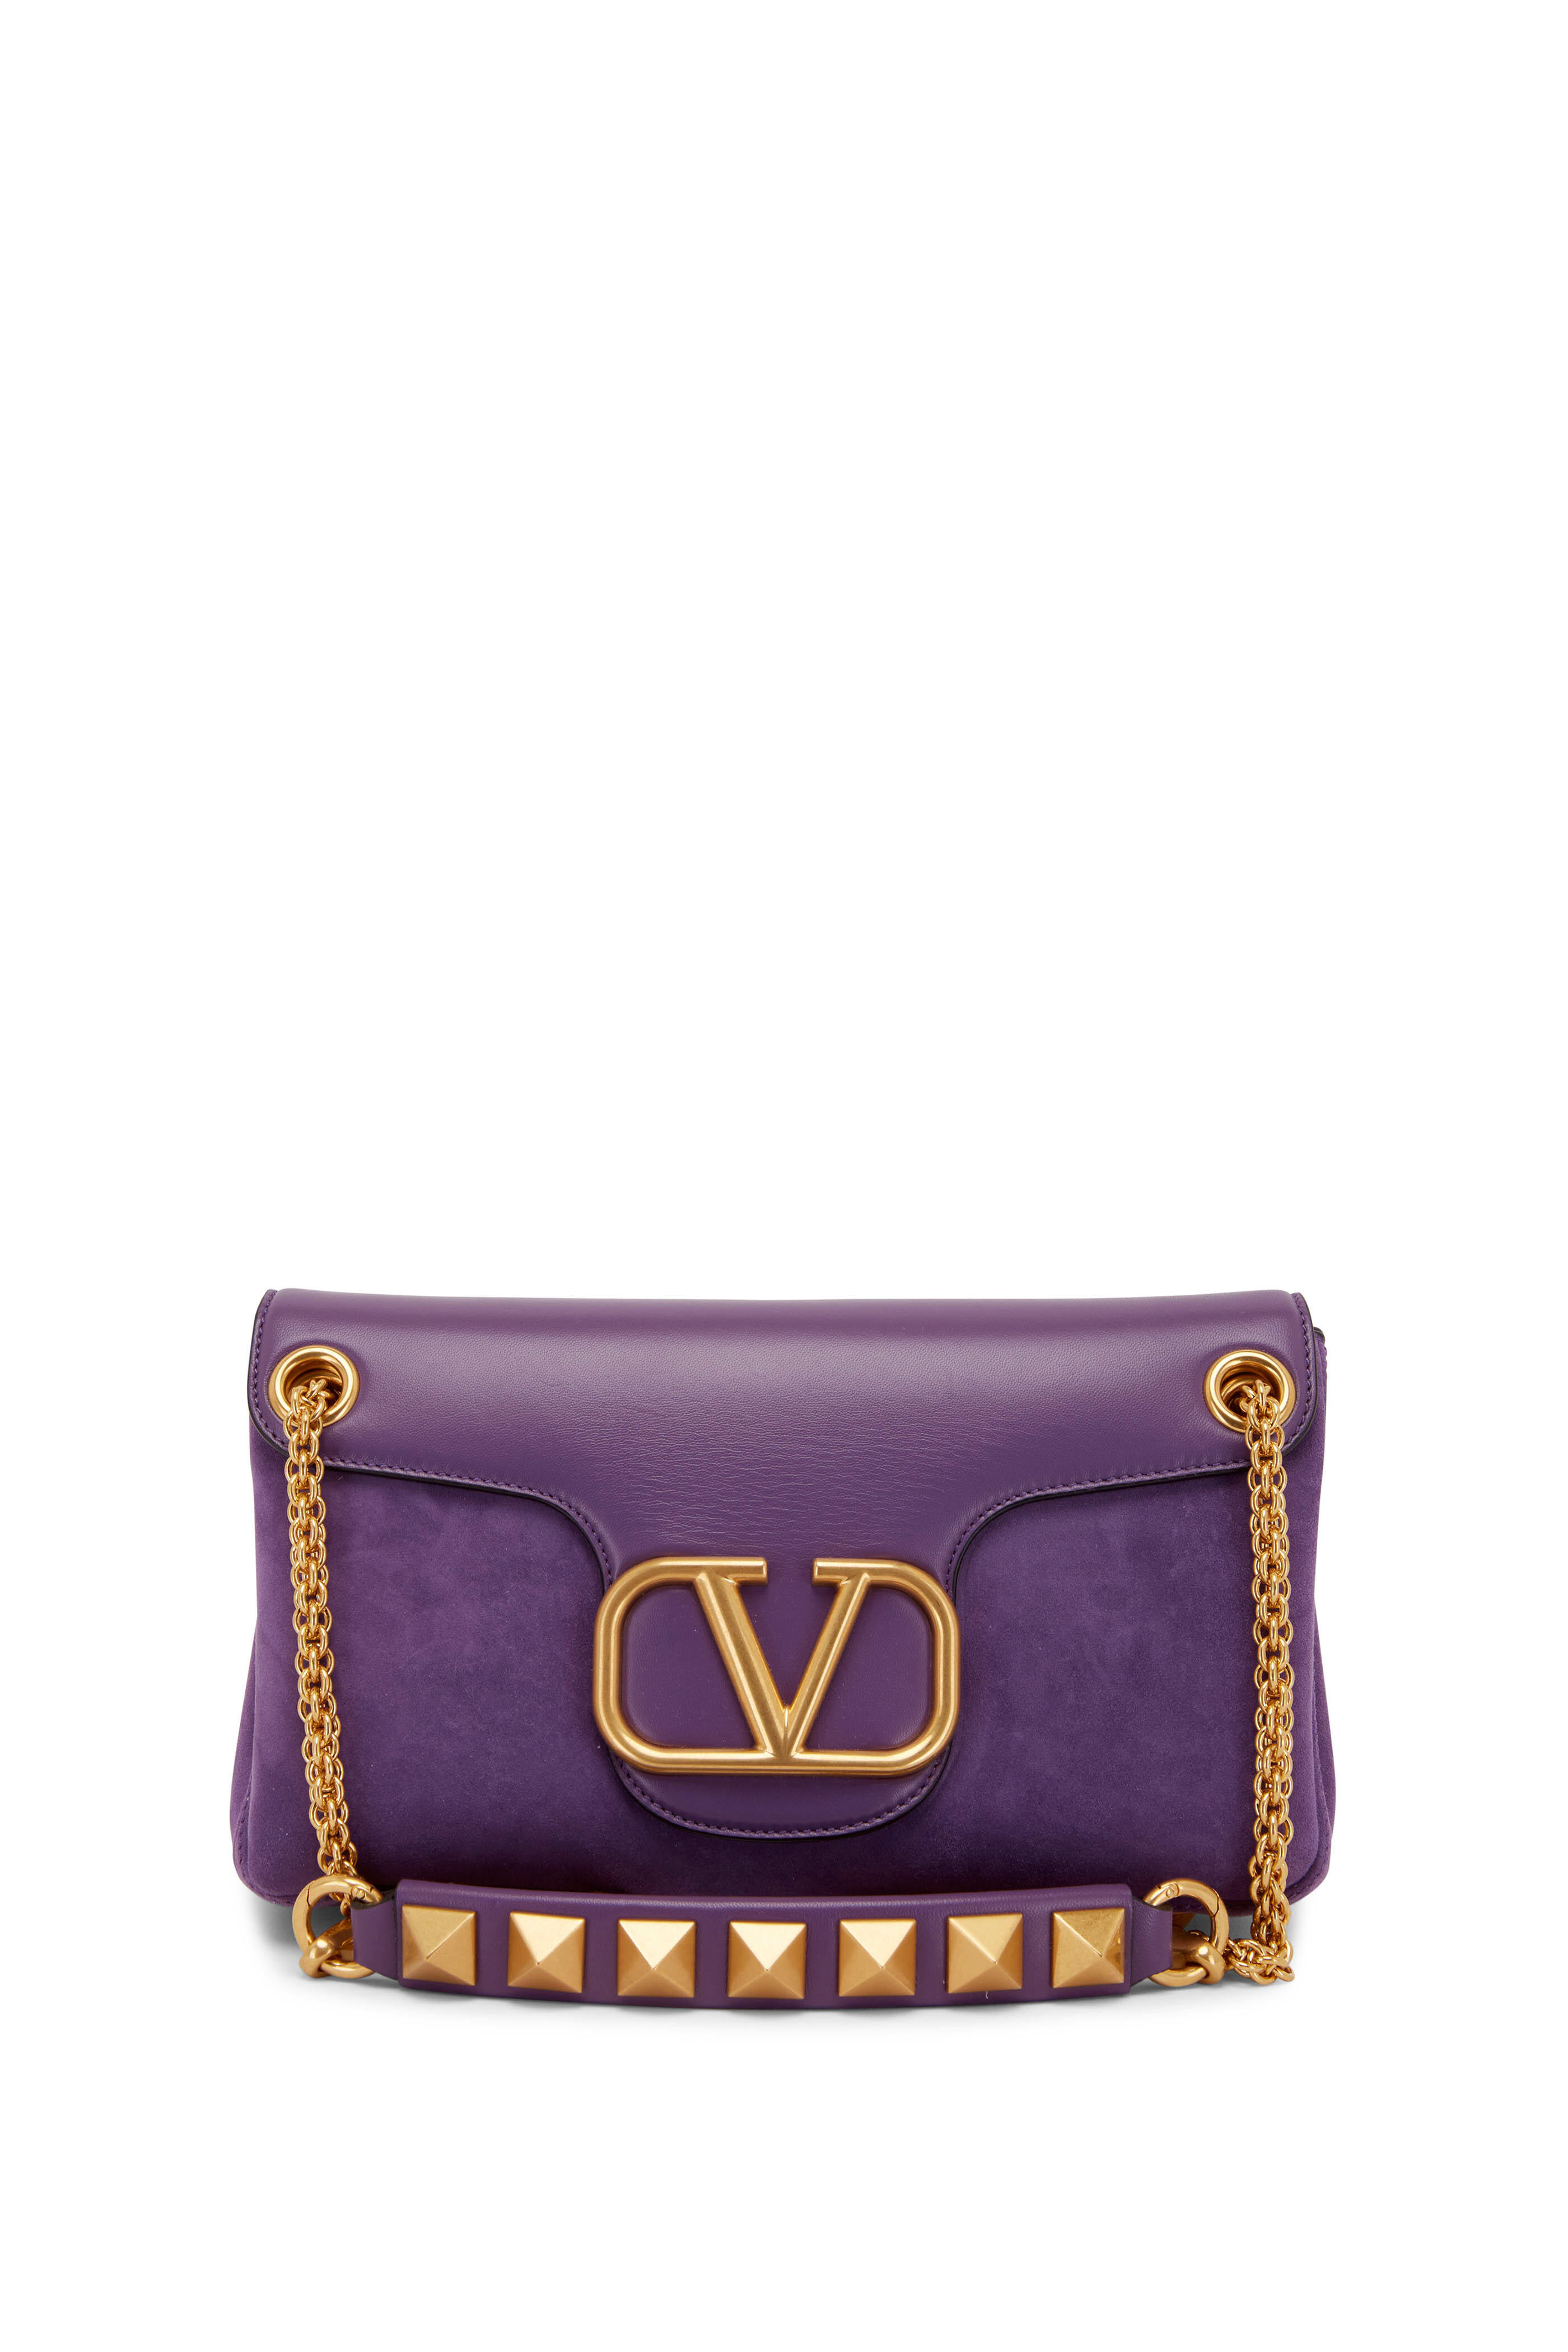 Valentino Womens Leather Jeweled Studded Clutch Handbag Black Silver Tone